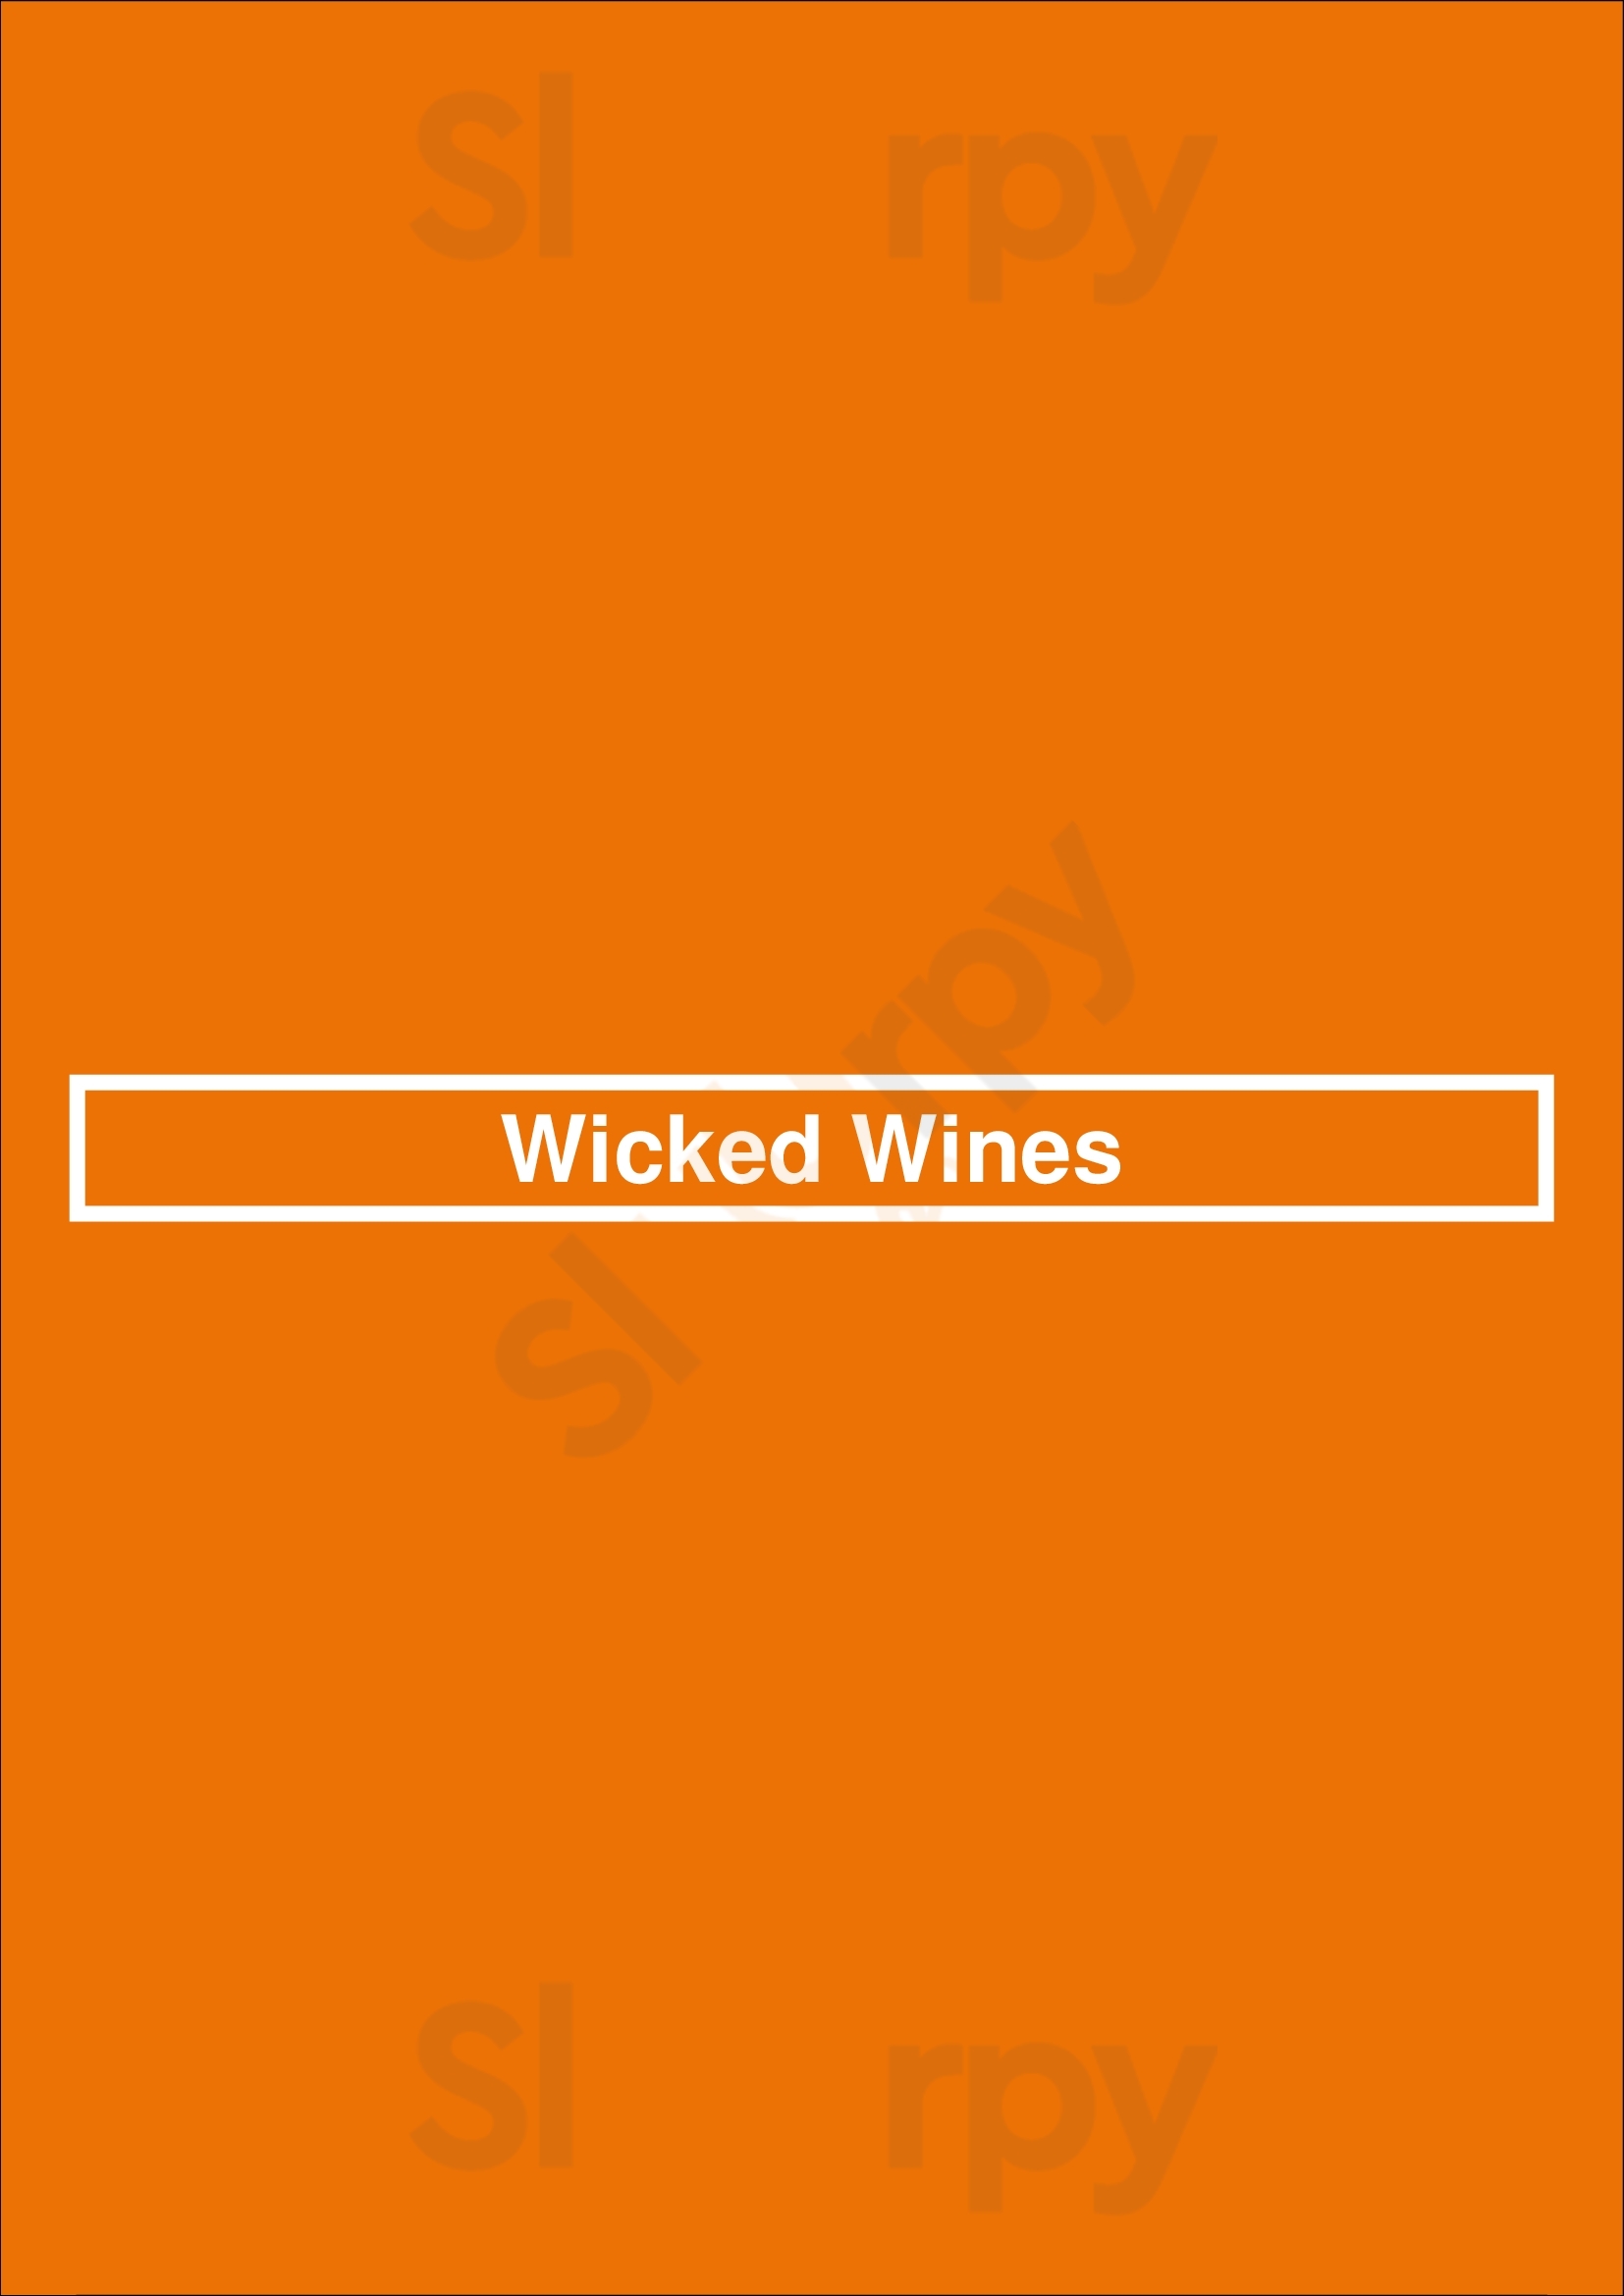 Wicked Wines Den Haag Menu - 1